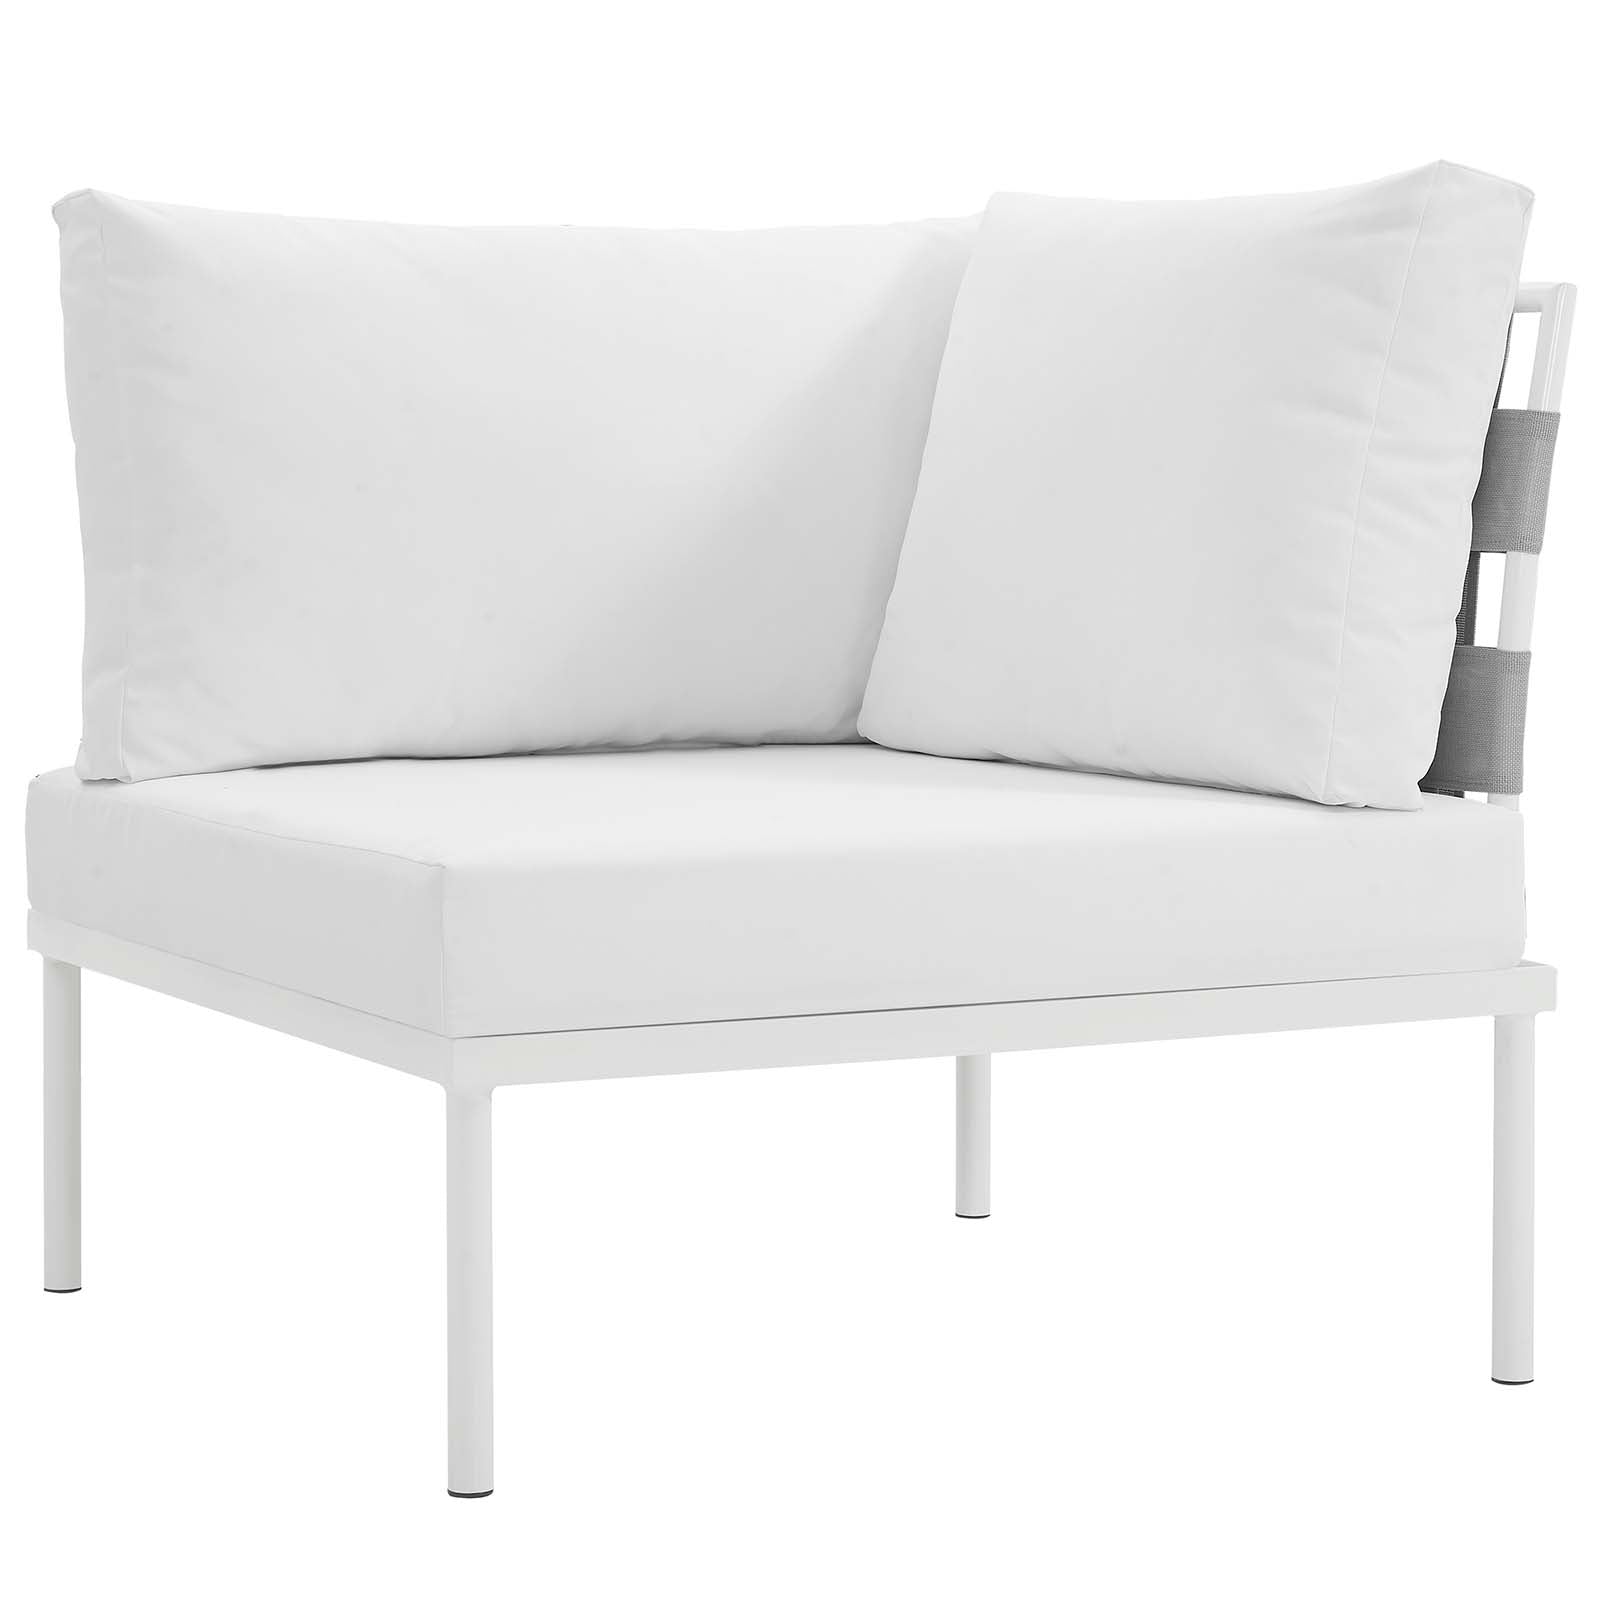 Modway Outdoor Conversation Sets - Harmony 132" 6 Piece Outdoor Patio Aluminum Sectional Sofa Set White White